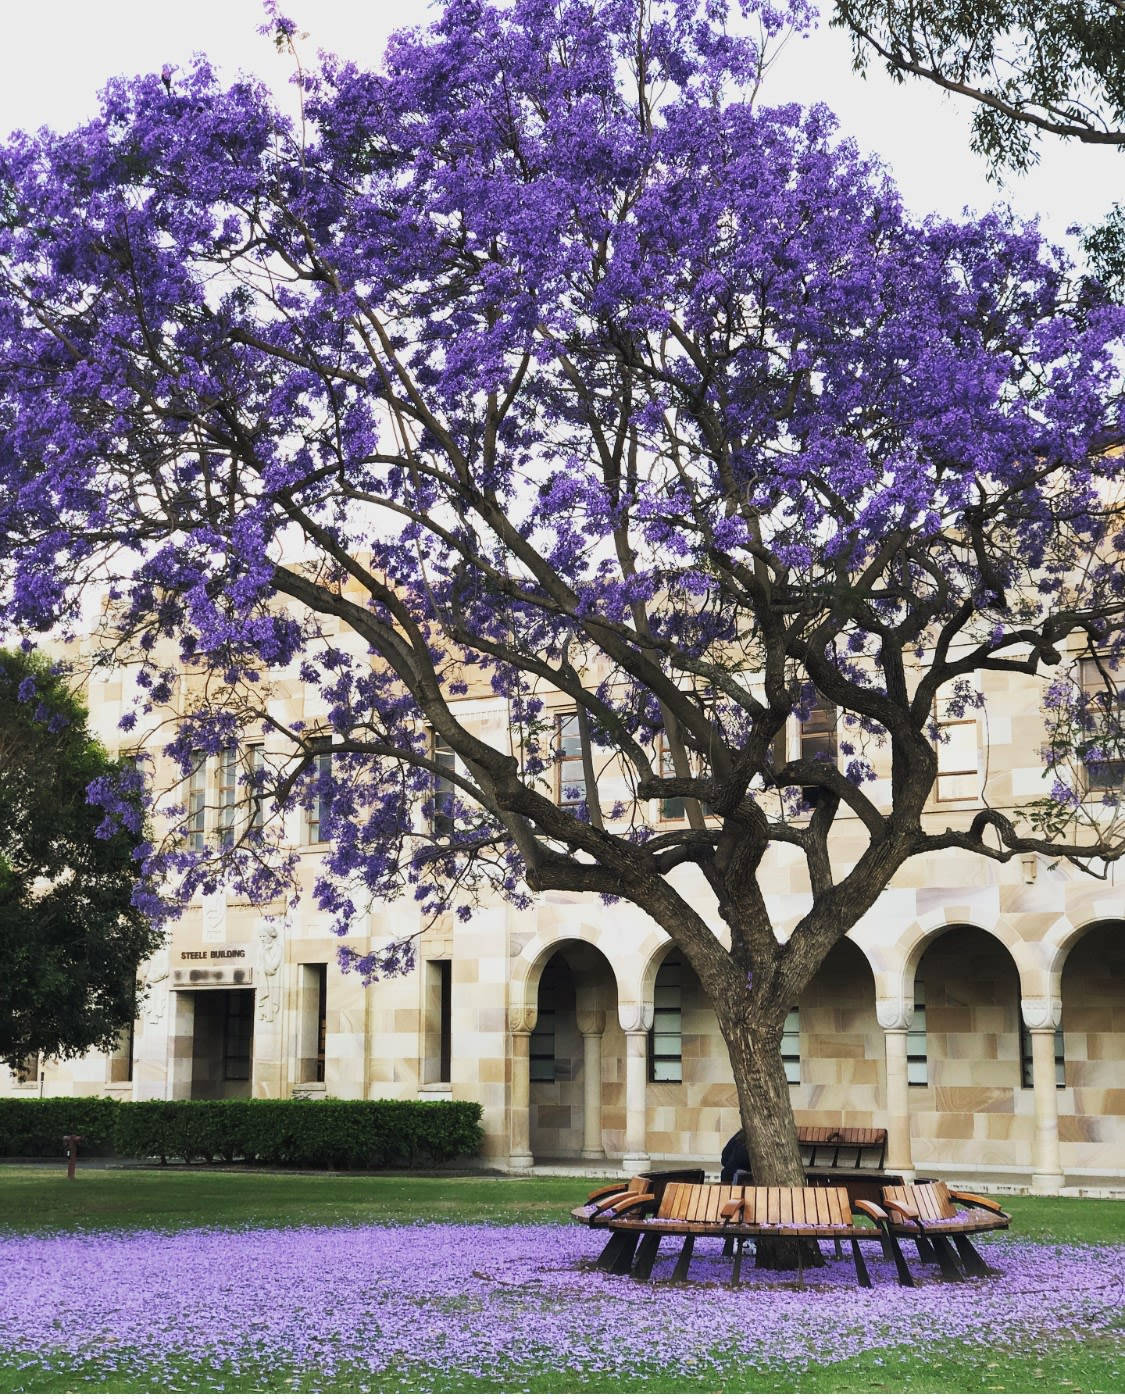 Bench Under The Purple Tree